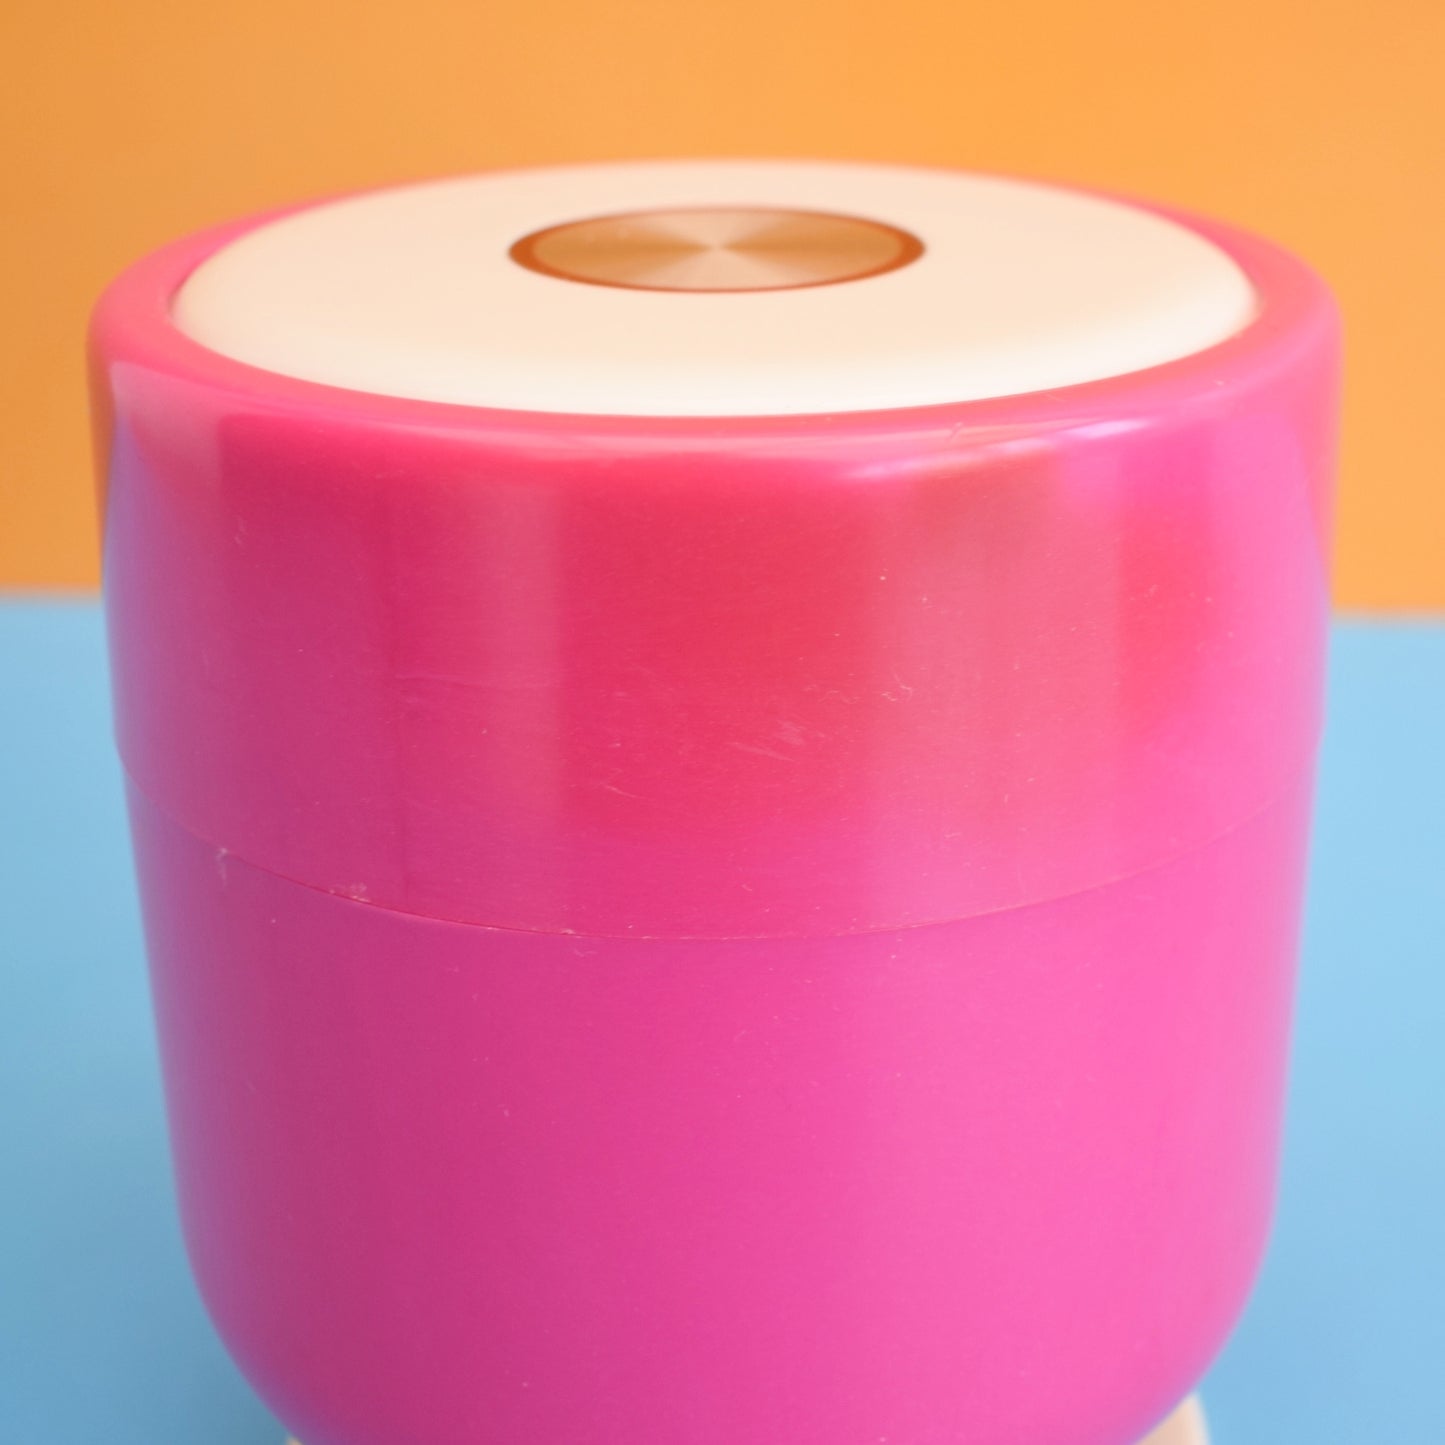 Vintage 1970s Plastic Beauty Case- Dressing Table Set - Pink